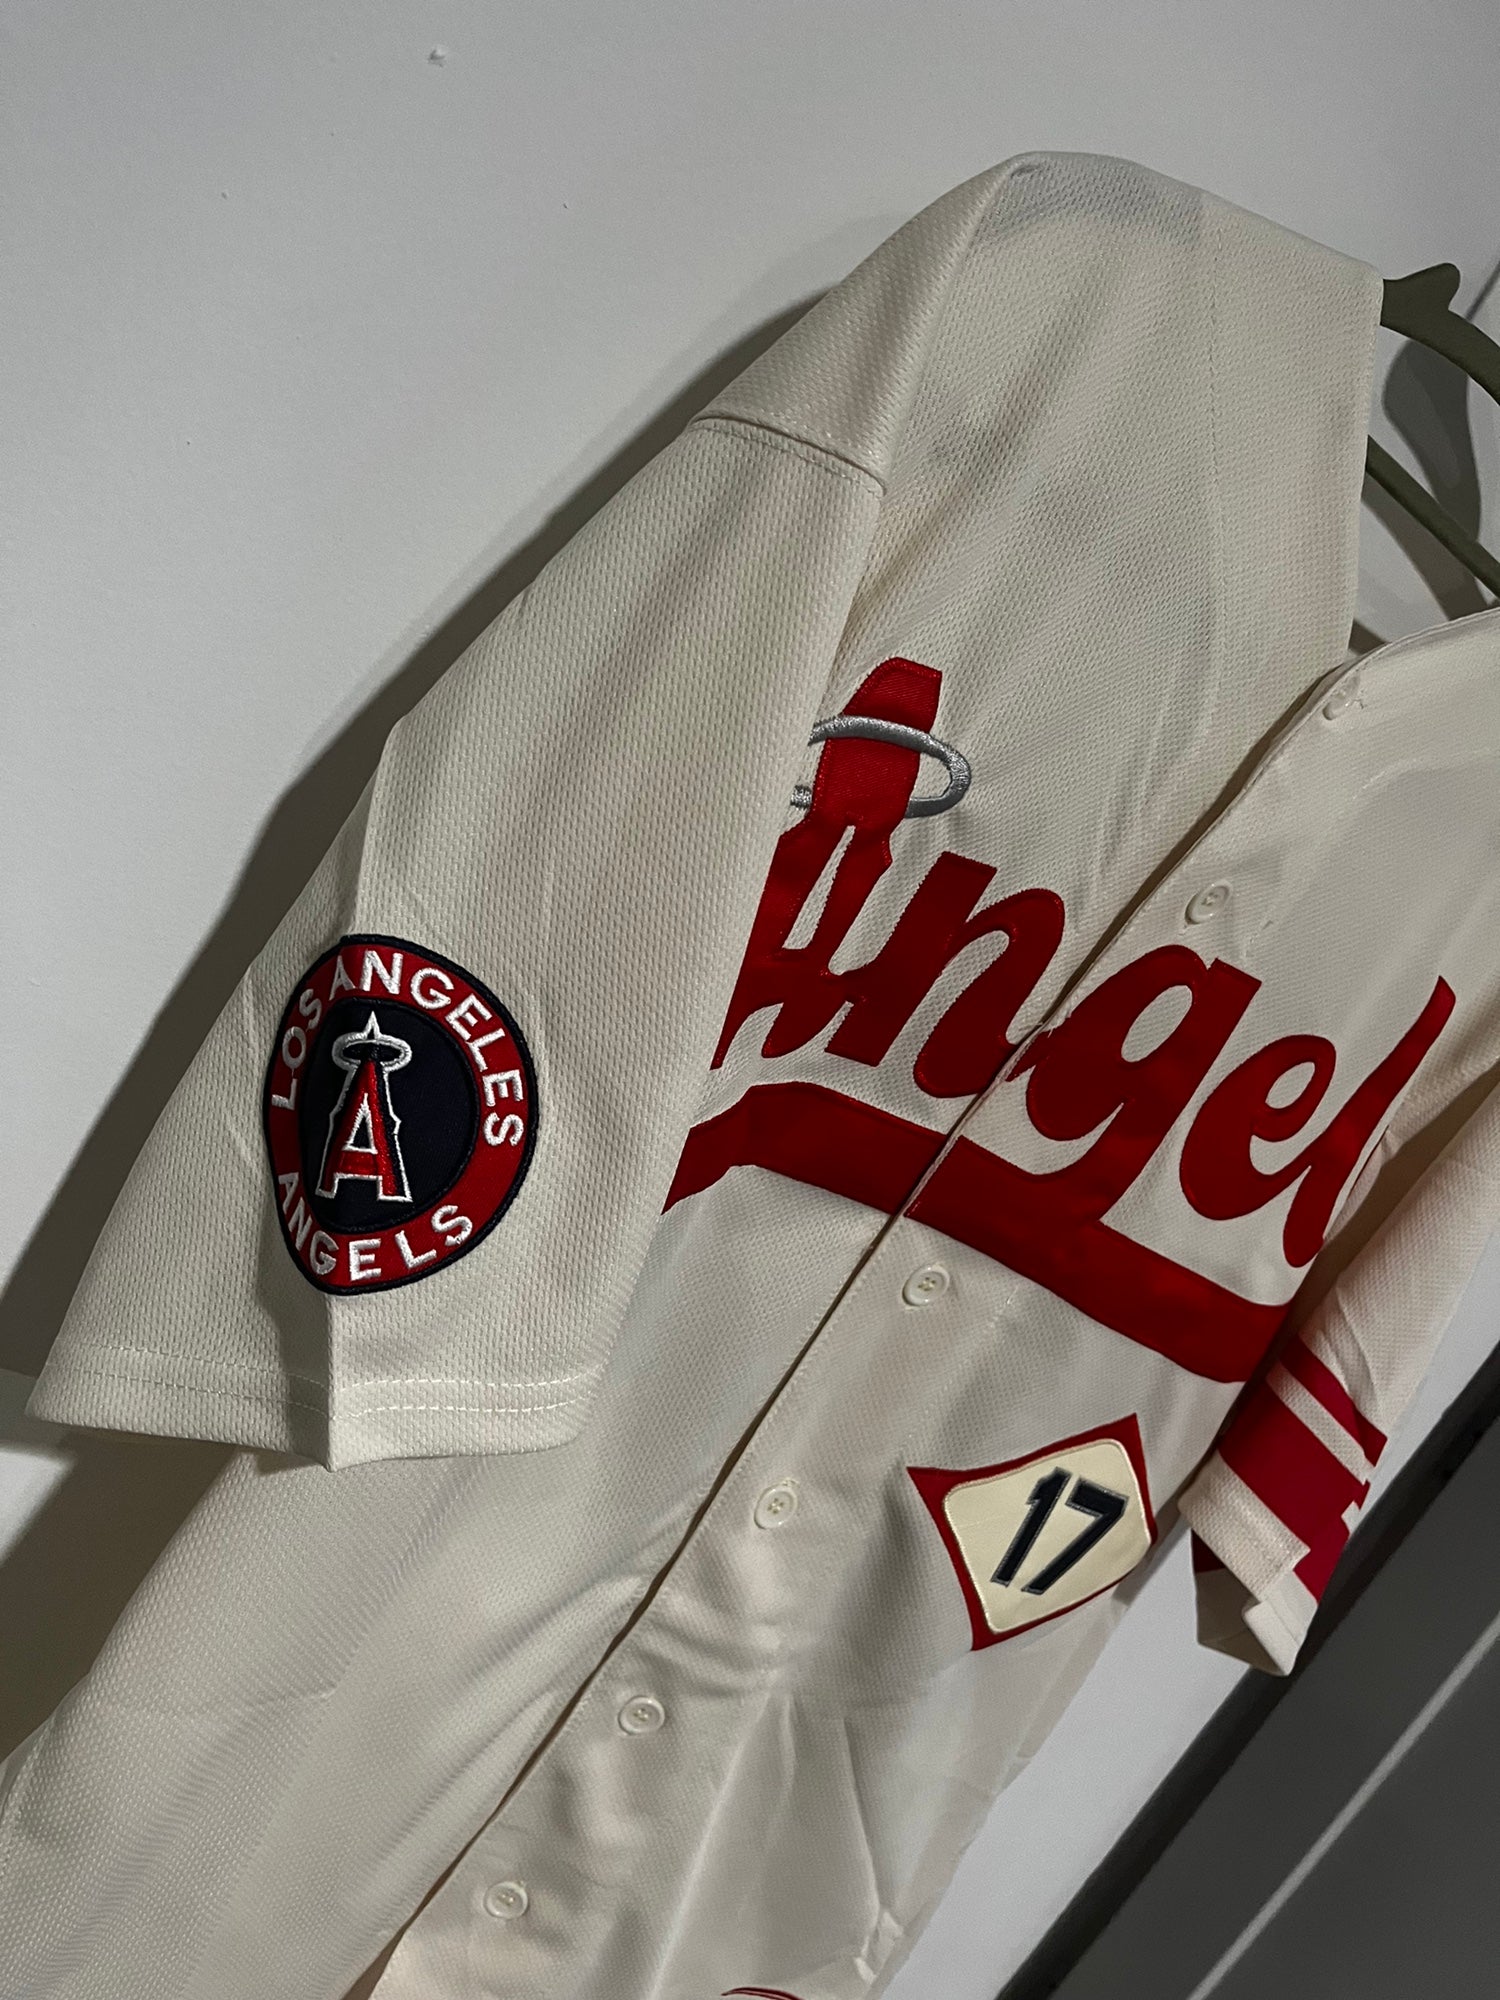 MLB Los Angeles Angels City Connect (Shohei Ohtani) Men's T-Shirt